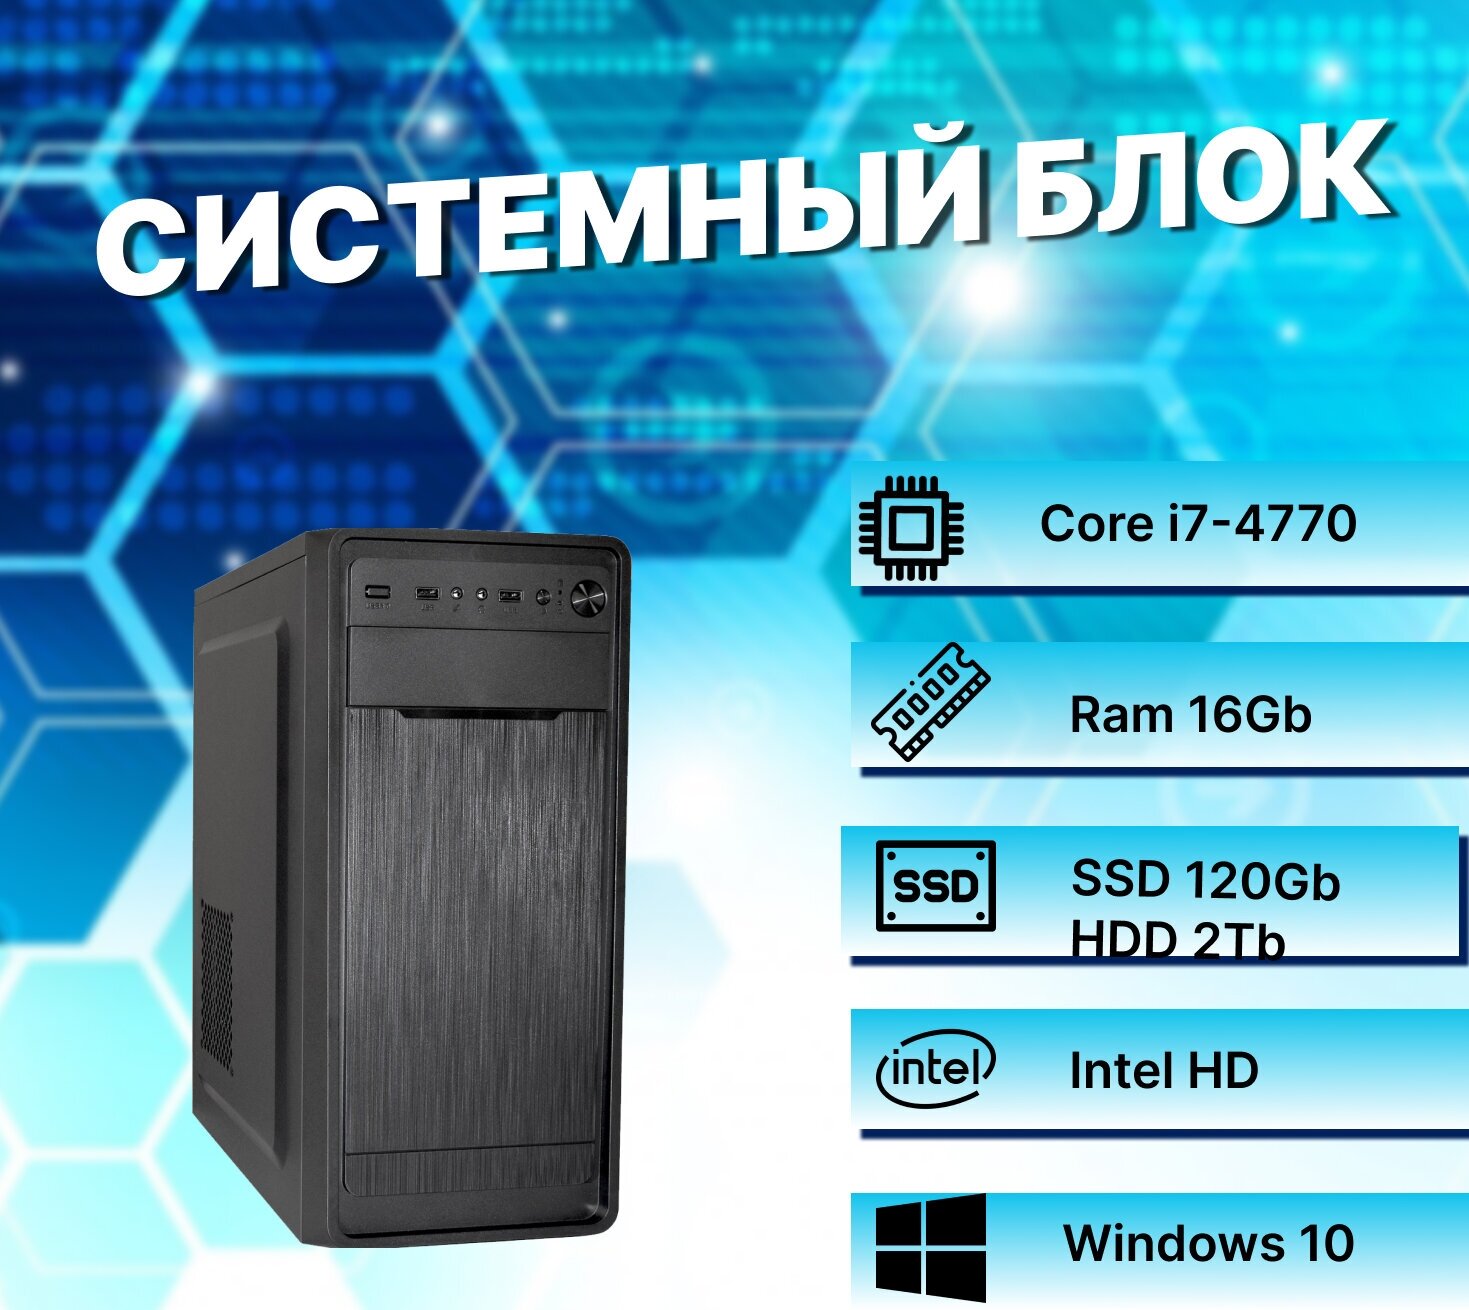 Системный блок Intel Core i7-4770 (3.4ГГц)/ RAM 16Gb/ SSD 120Gb/ HDD 2Tb/ Intel HD/ Windows 10 Pro